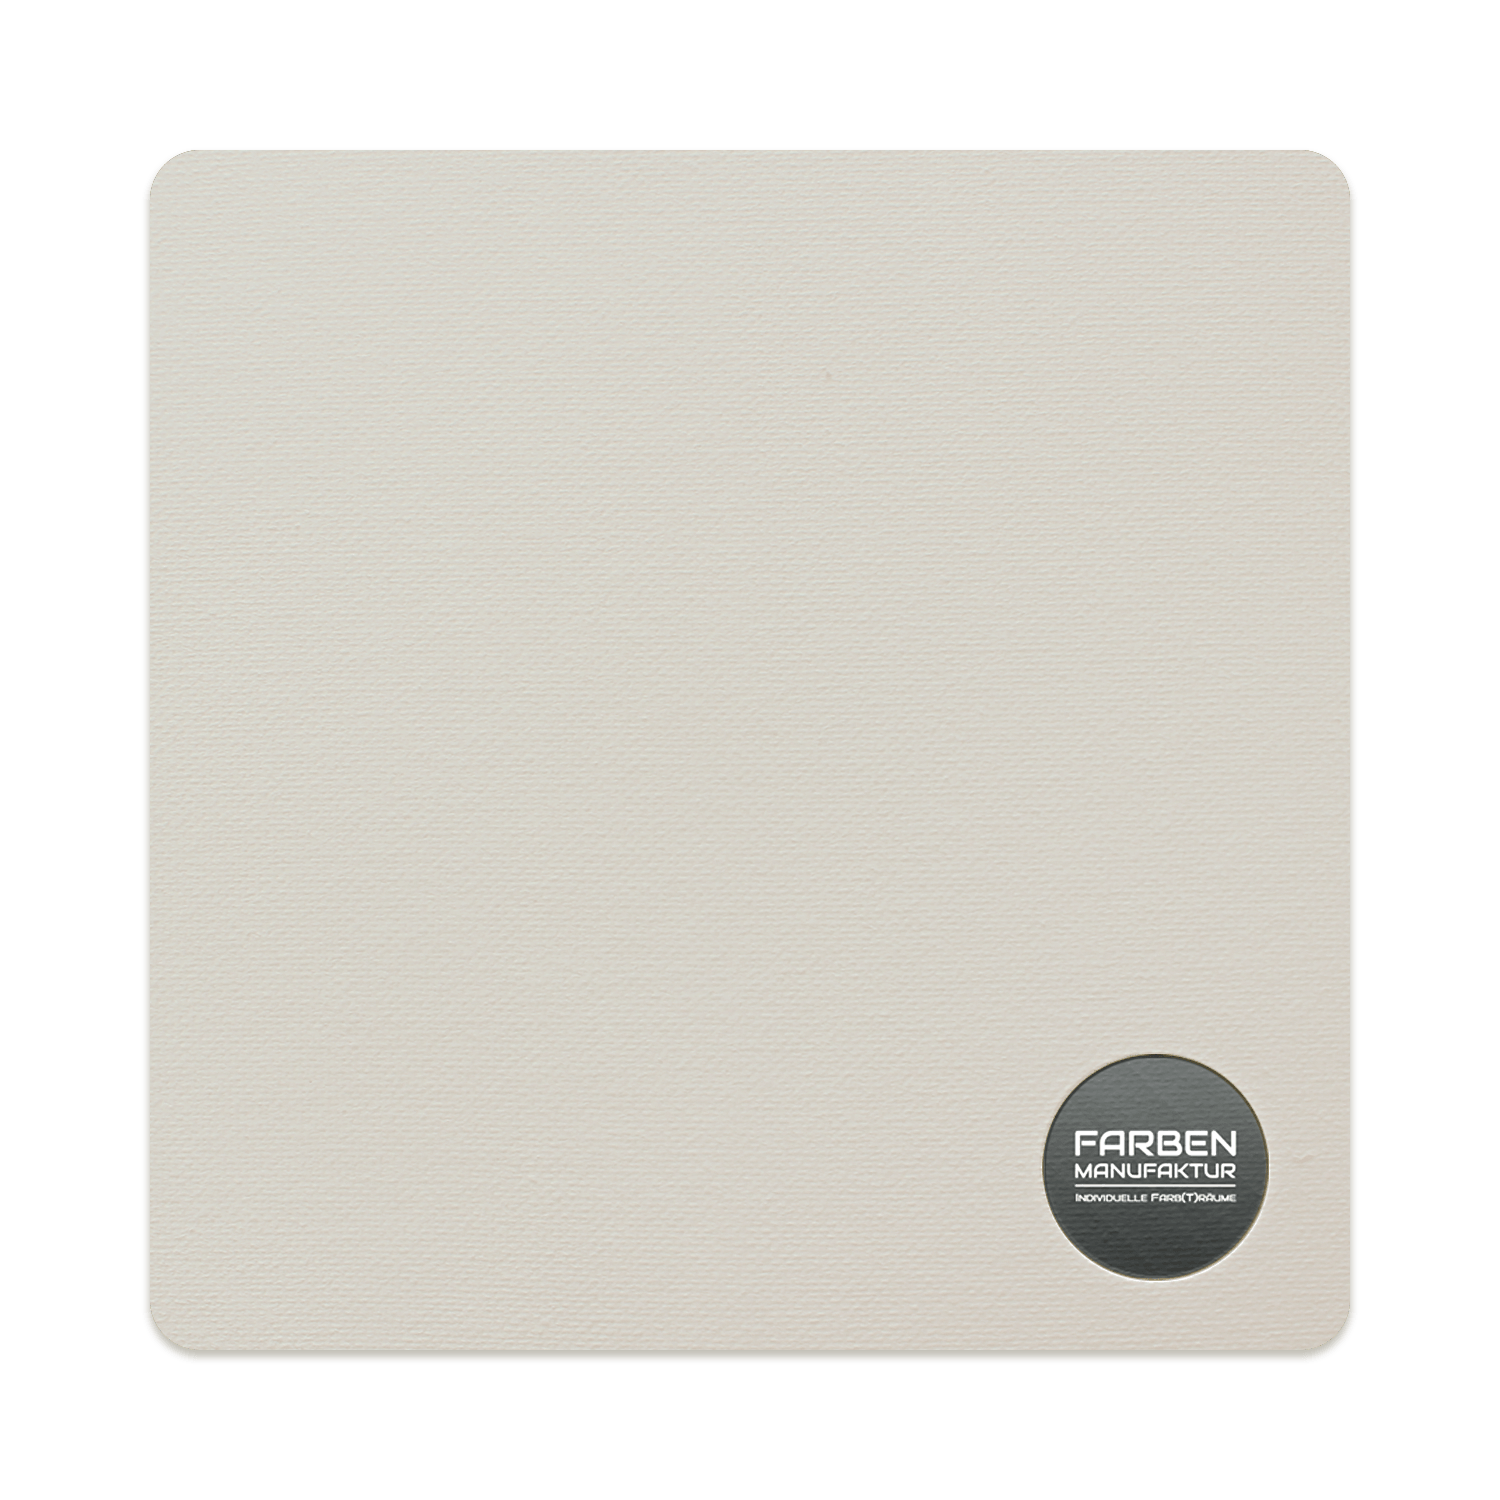 Farben Manufaktur Glam Collection Kreidefarbe Trendtöne - Dunkles Weiß/Grau